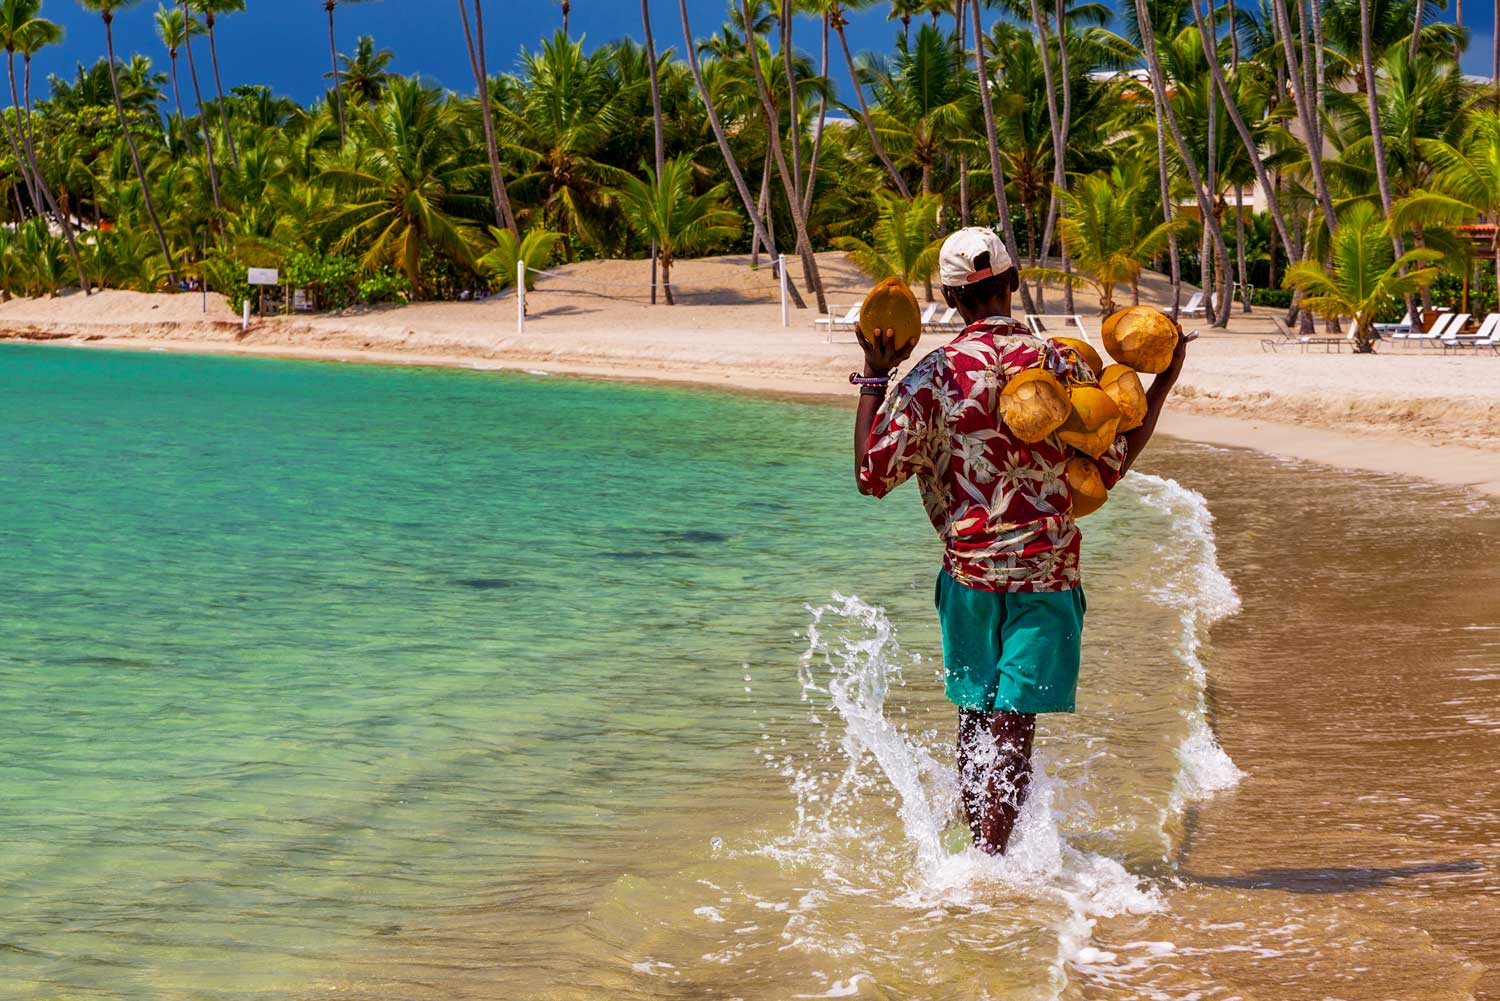 Beach coconut vendor walking on the shore.